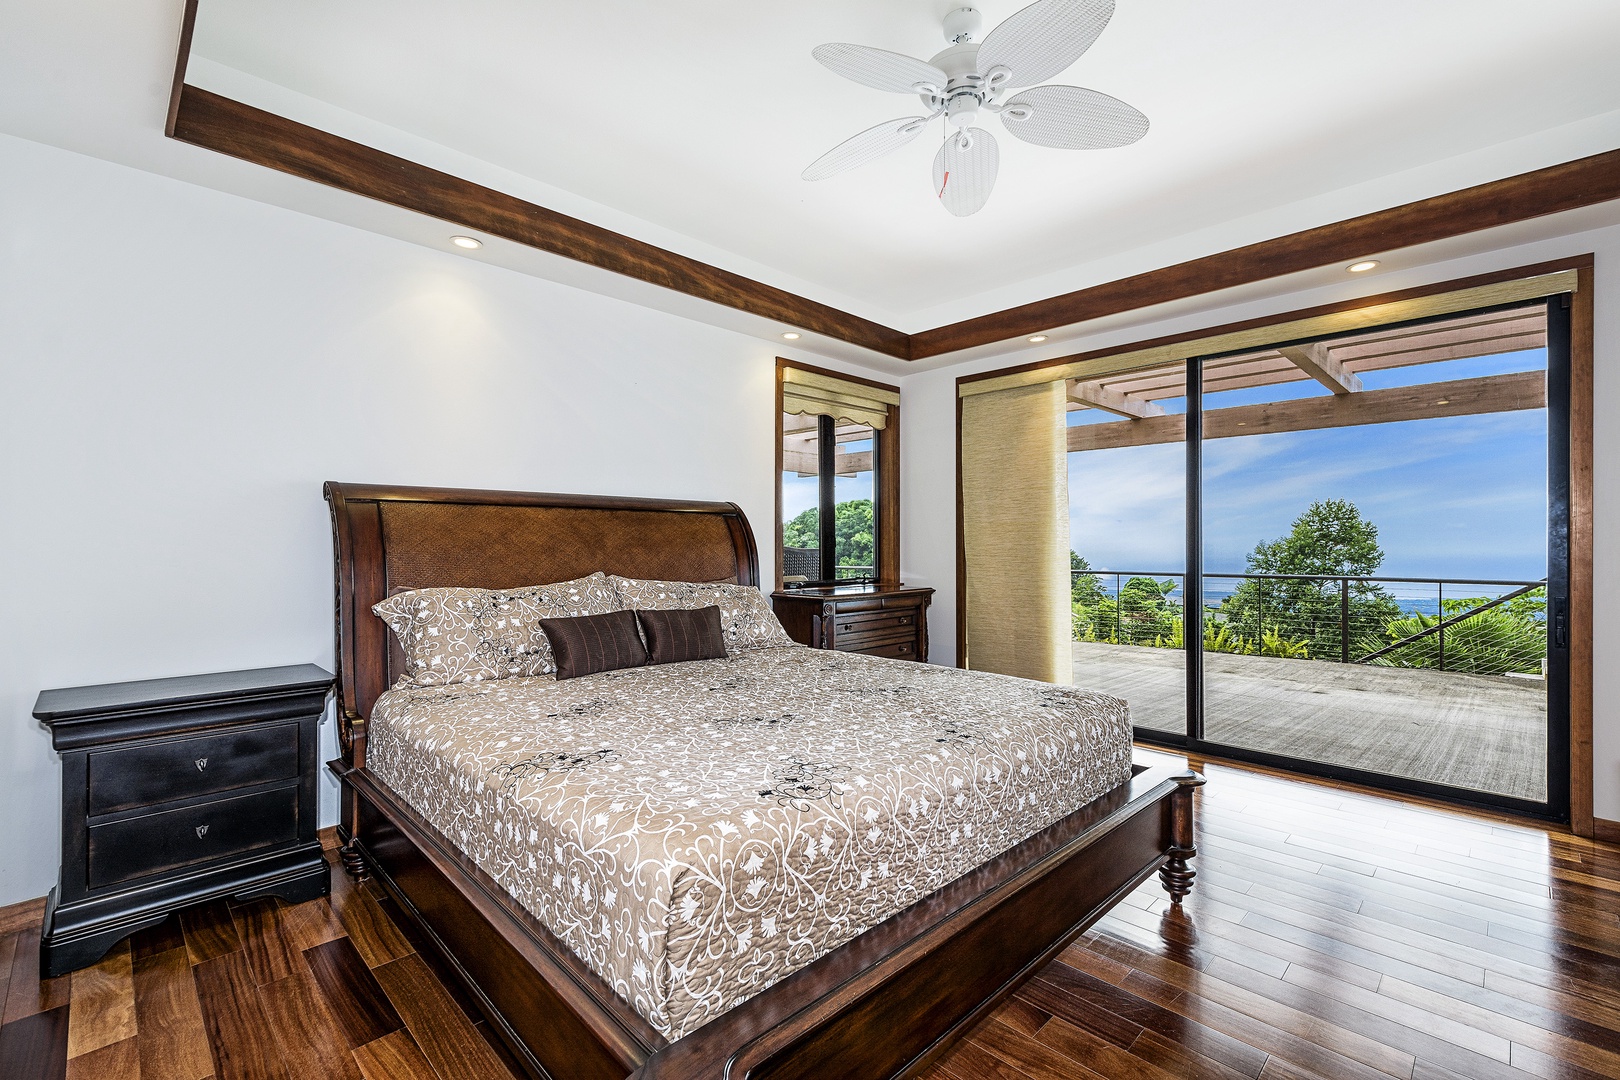 Kailua Kona Vacation Rentals, O'oma Plantation - Guest bedroom with King bed and Lanai access!